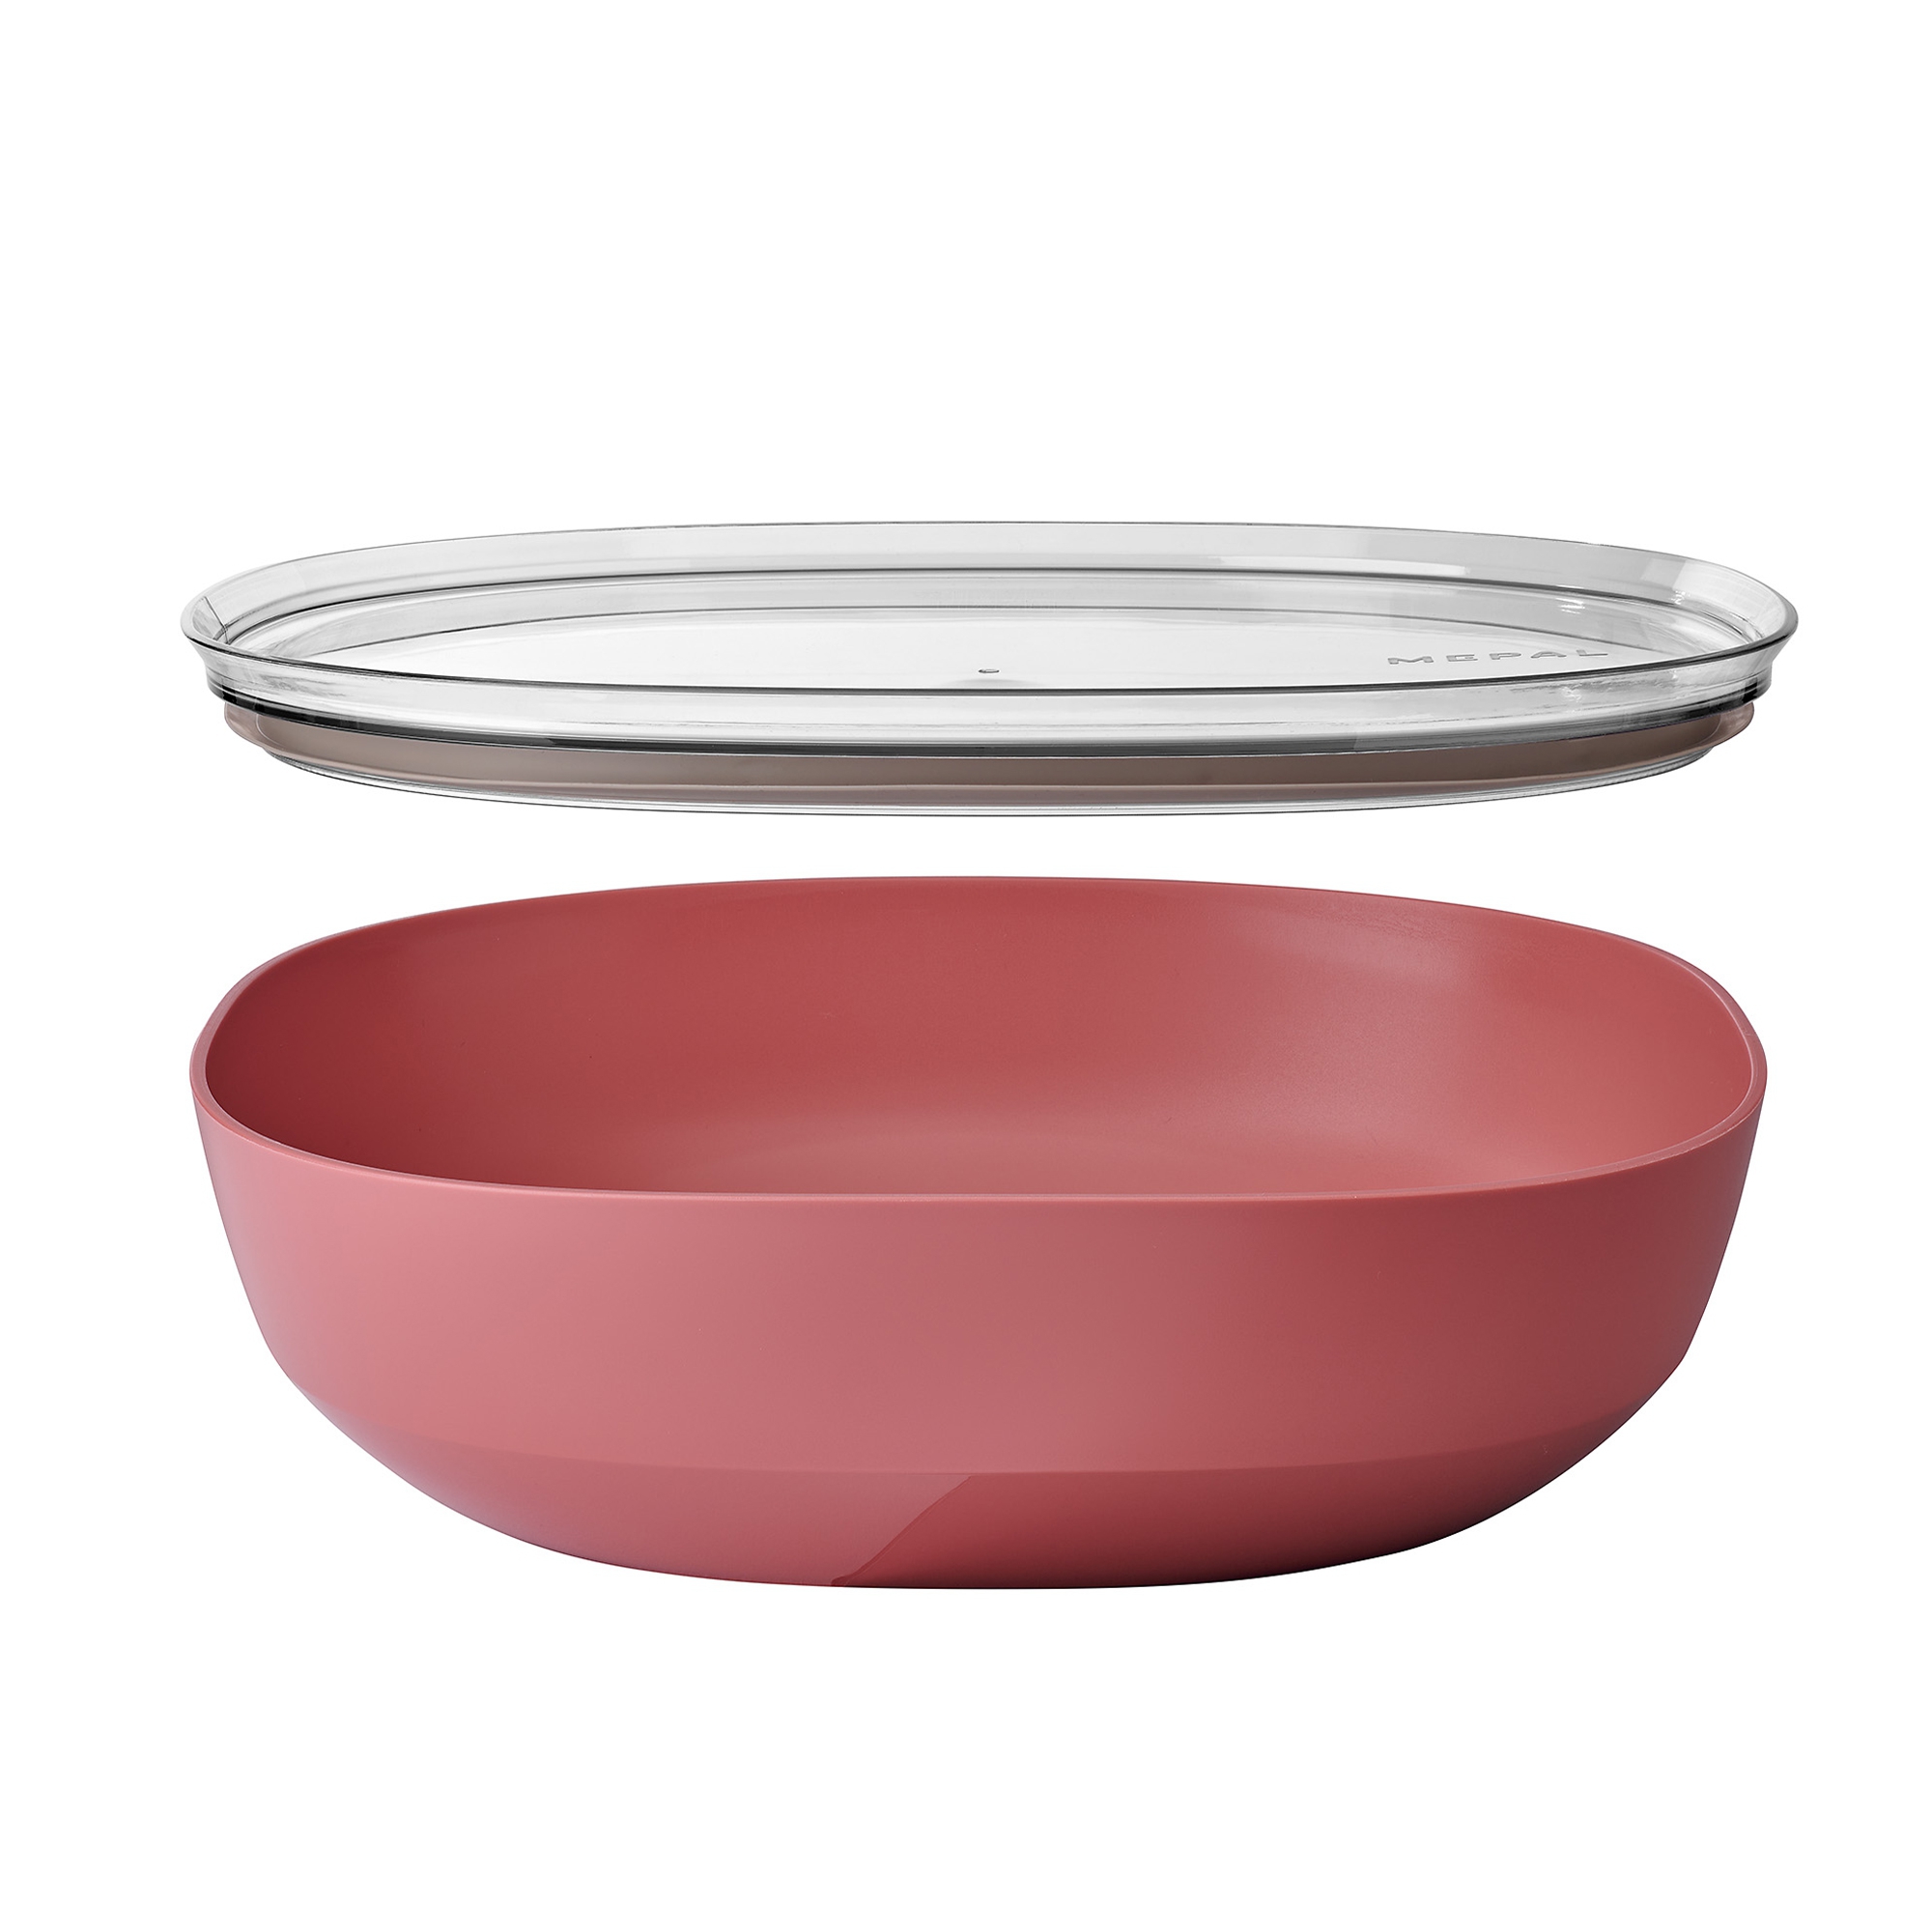 Mepal - Silueta serving bowl with lid - 4 L - Vivid mauve